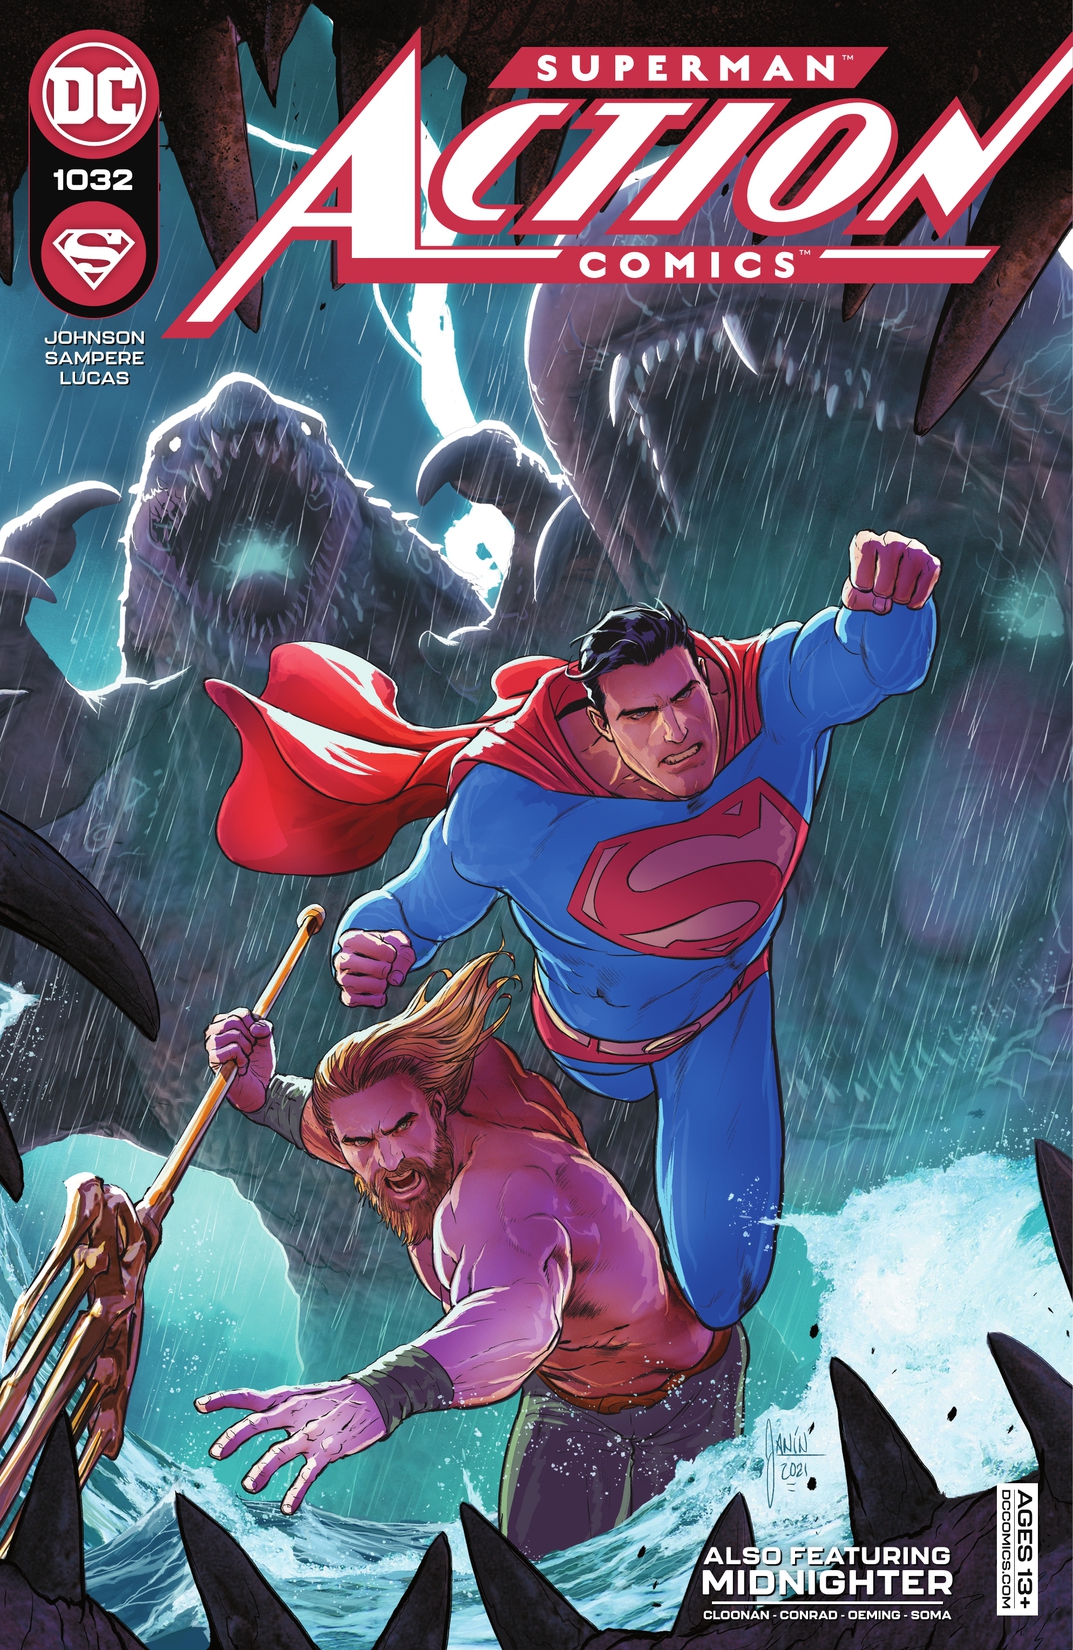 Action Comics (2016-) #1032 preview images